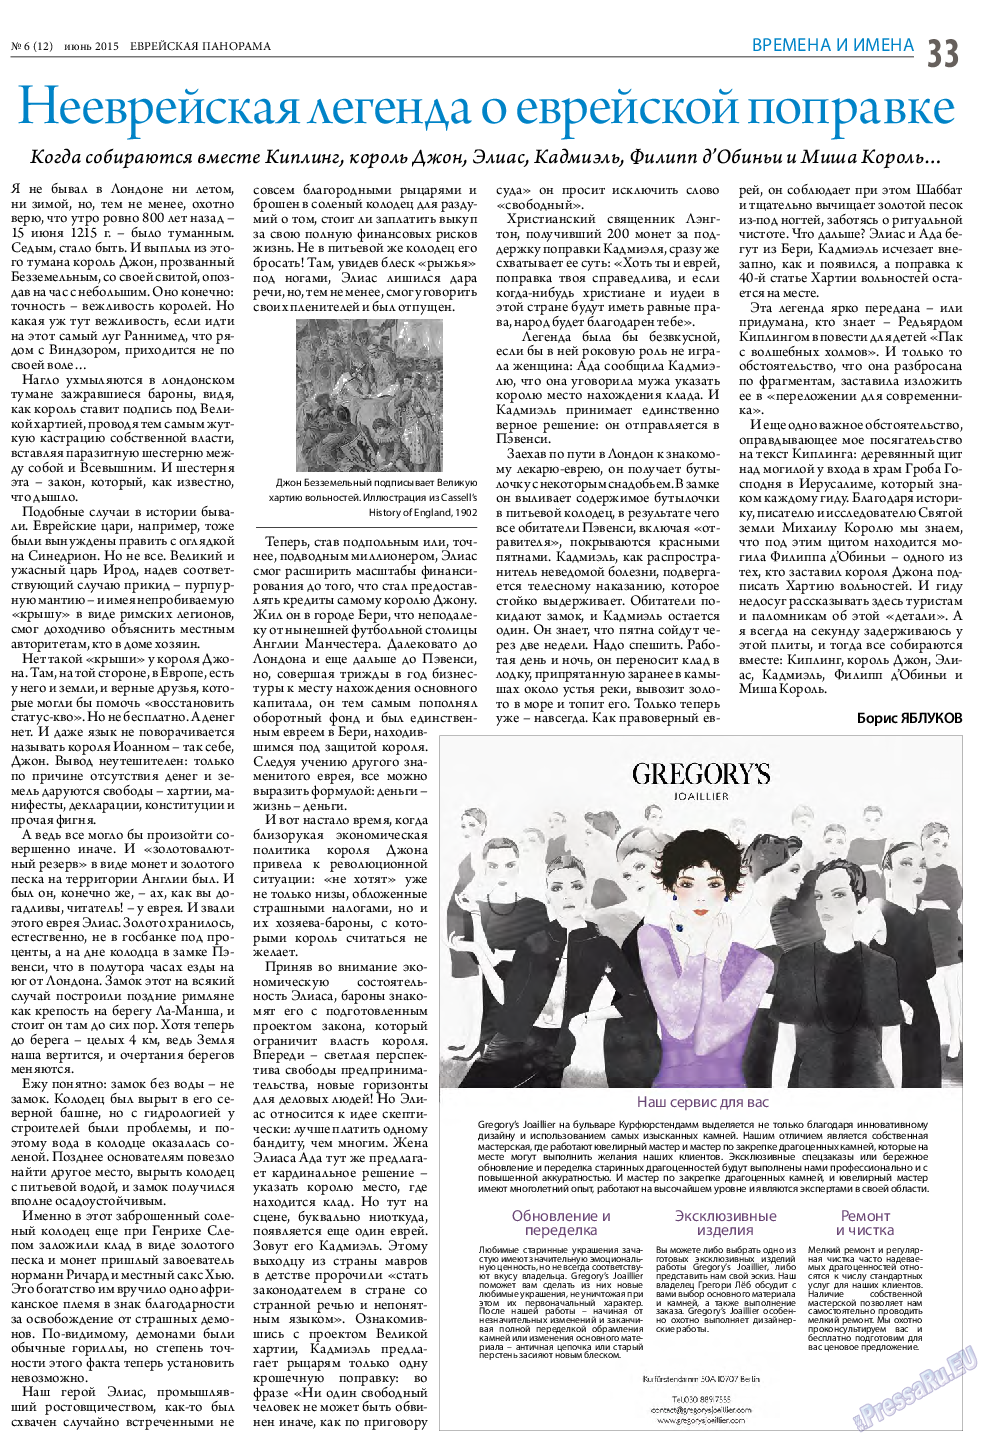 Еврейская панорама, газета. 2015 №6 стр.33